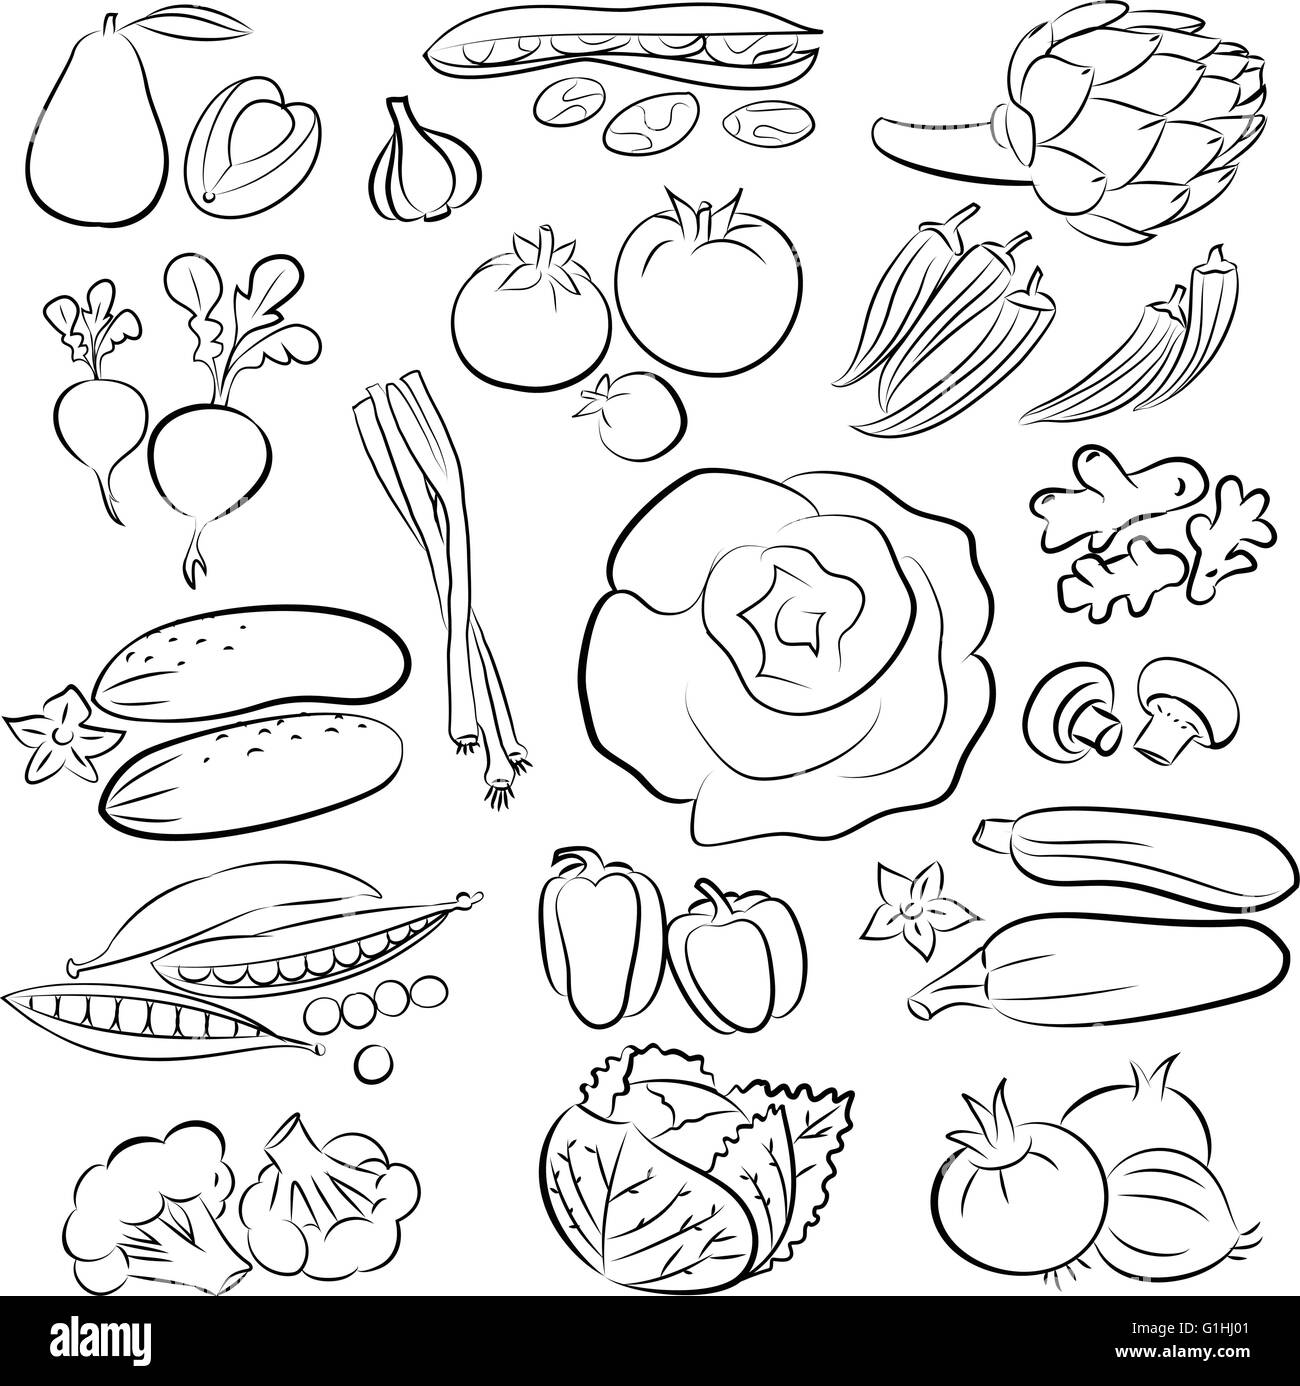 Vector Illustration of vegetables in line art mode Stock Vector